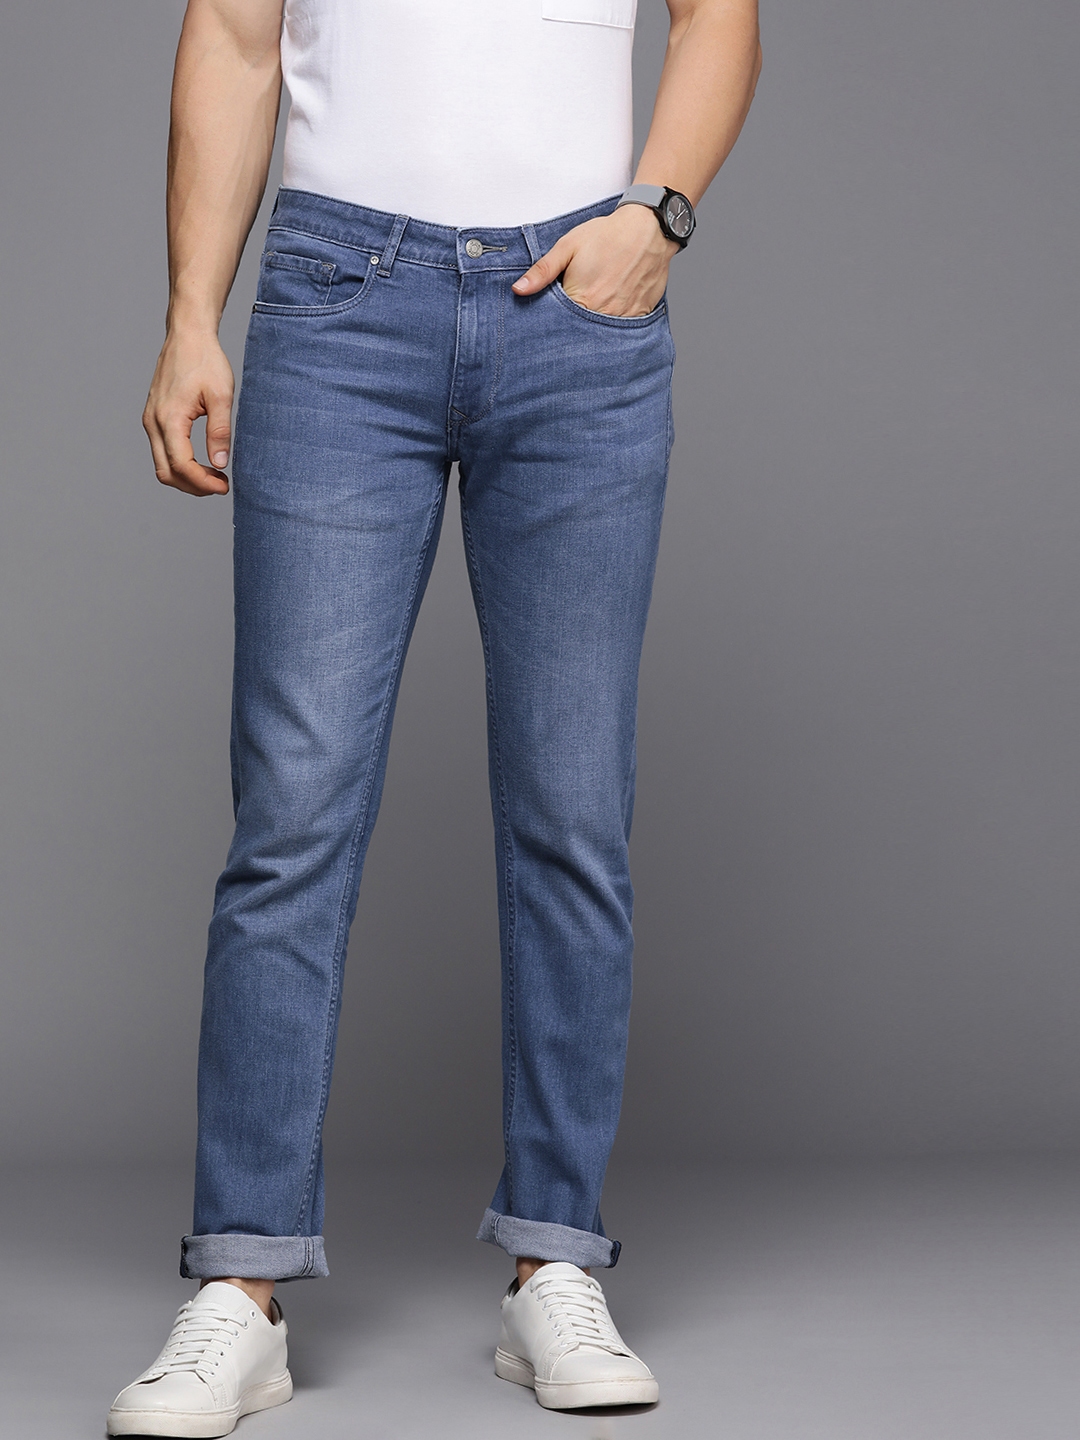 Buy Louis Philippe Jeans Men Navy Blue Matt Slim Fit Low Rise